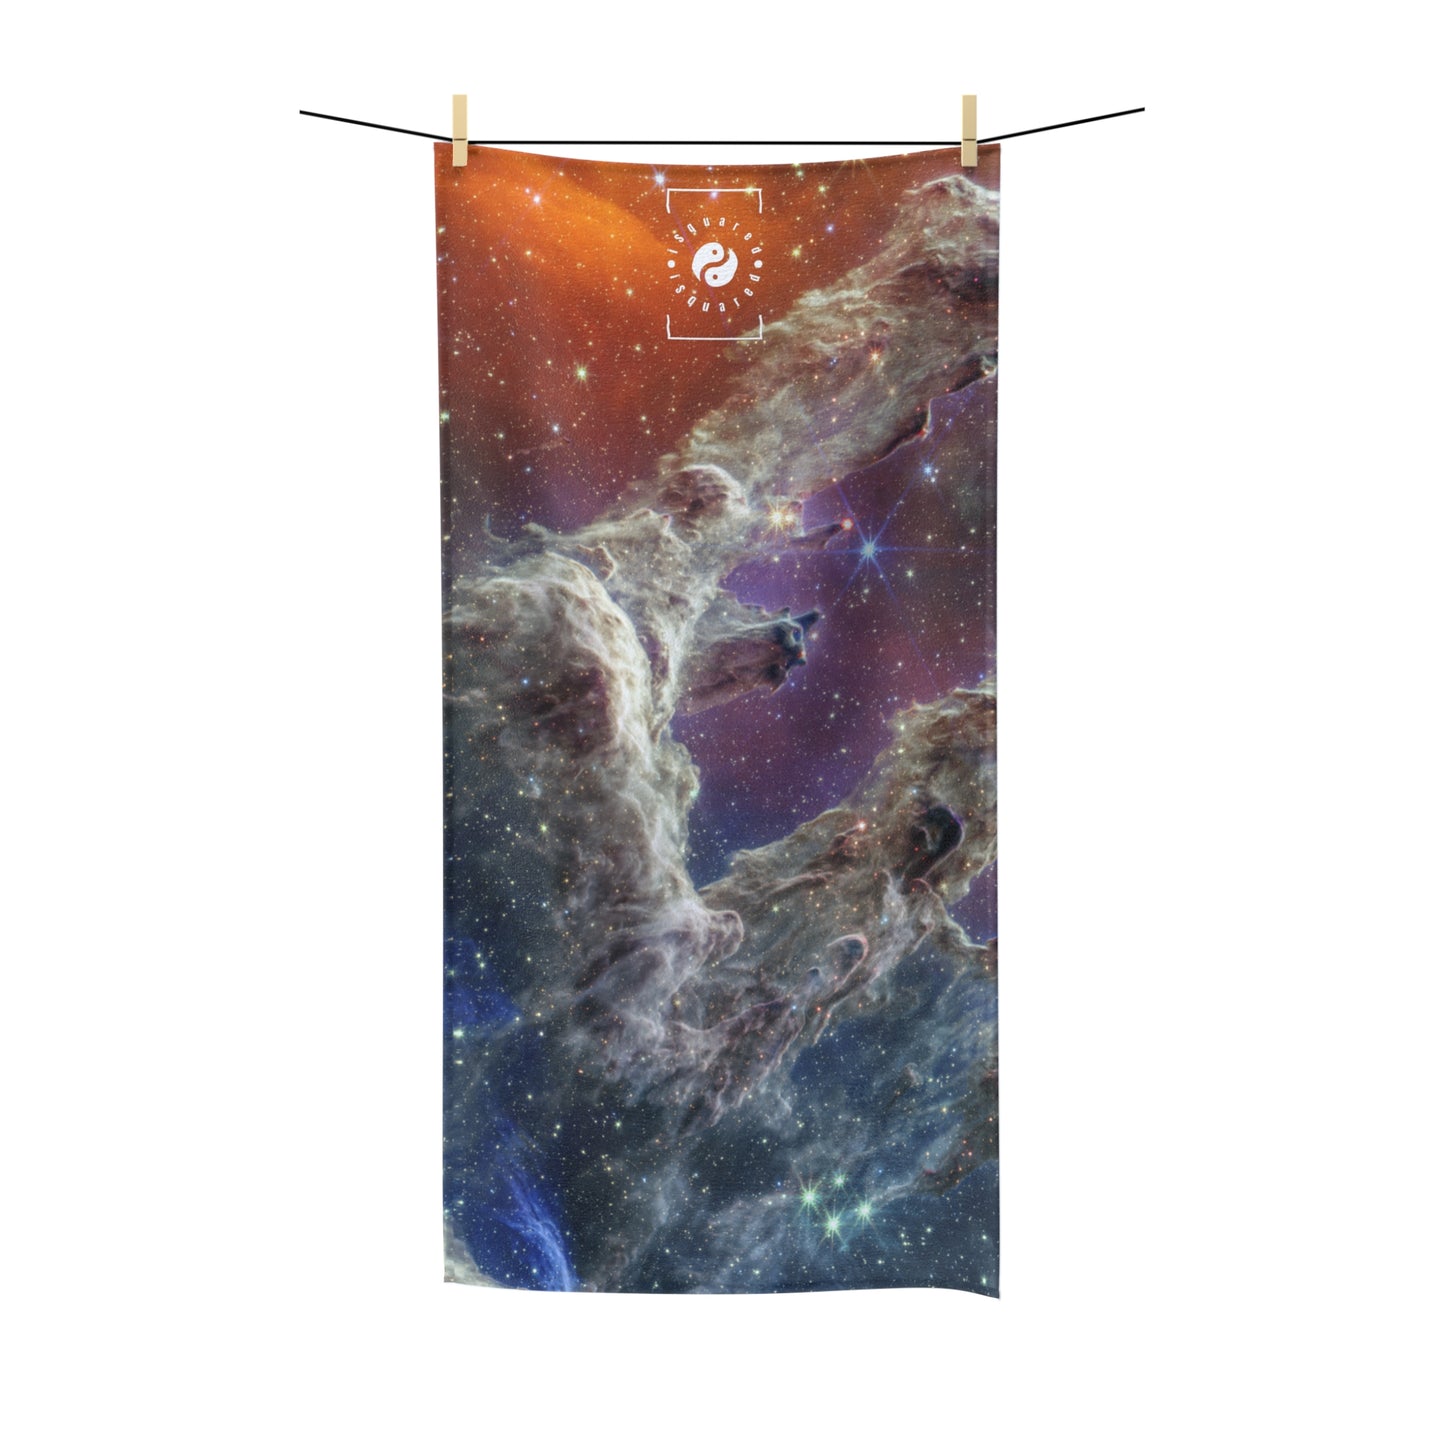 Pillars of Creation (NIRCam and MIRI Composite Image) - JWST Collection - All Purpose Yoga Towel